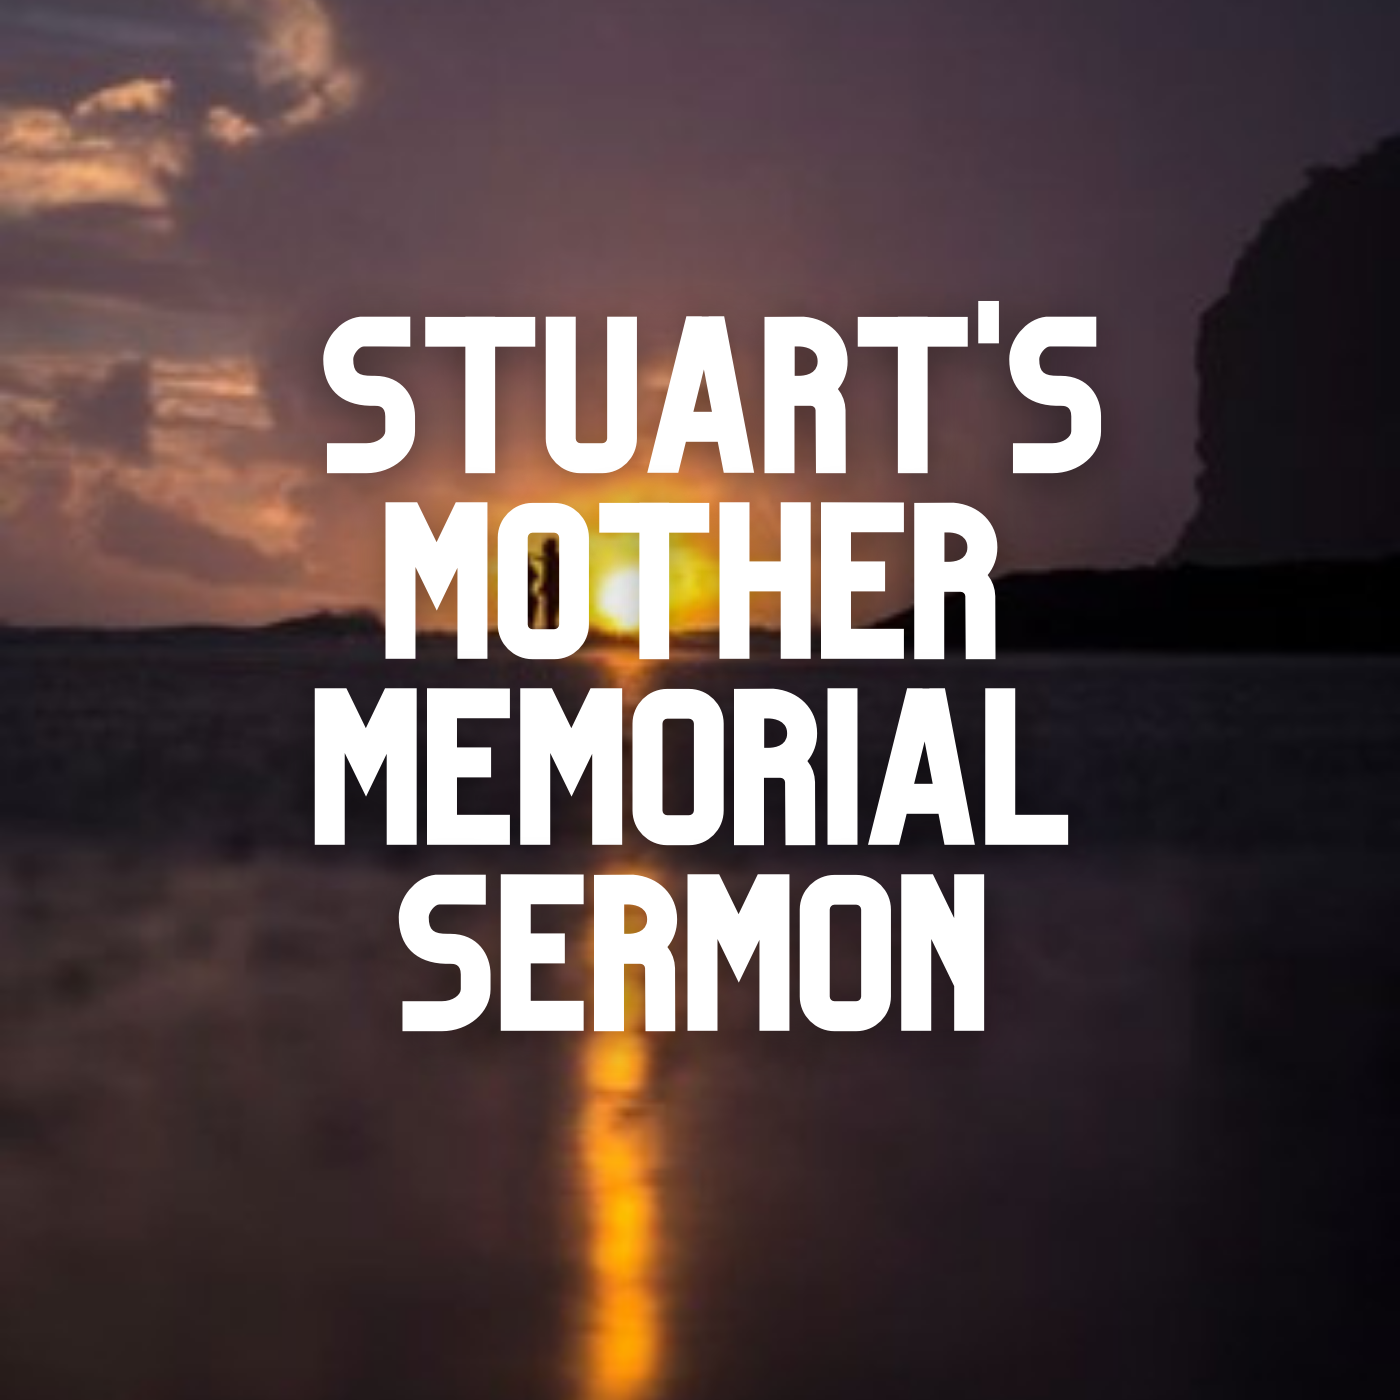 STUART'S MOTHER MEMORIAL SERMON